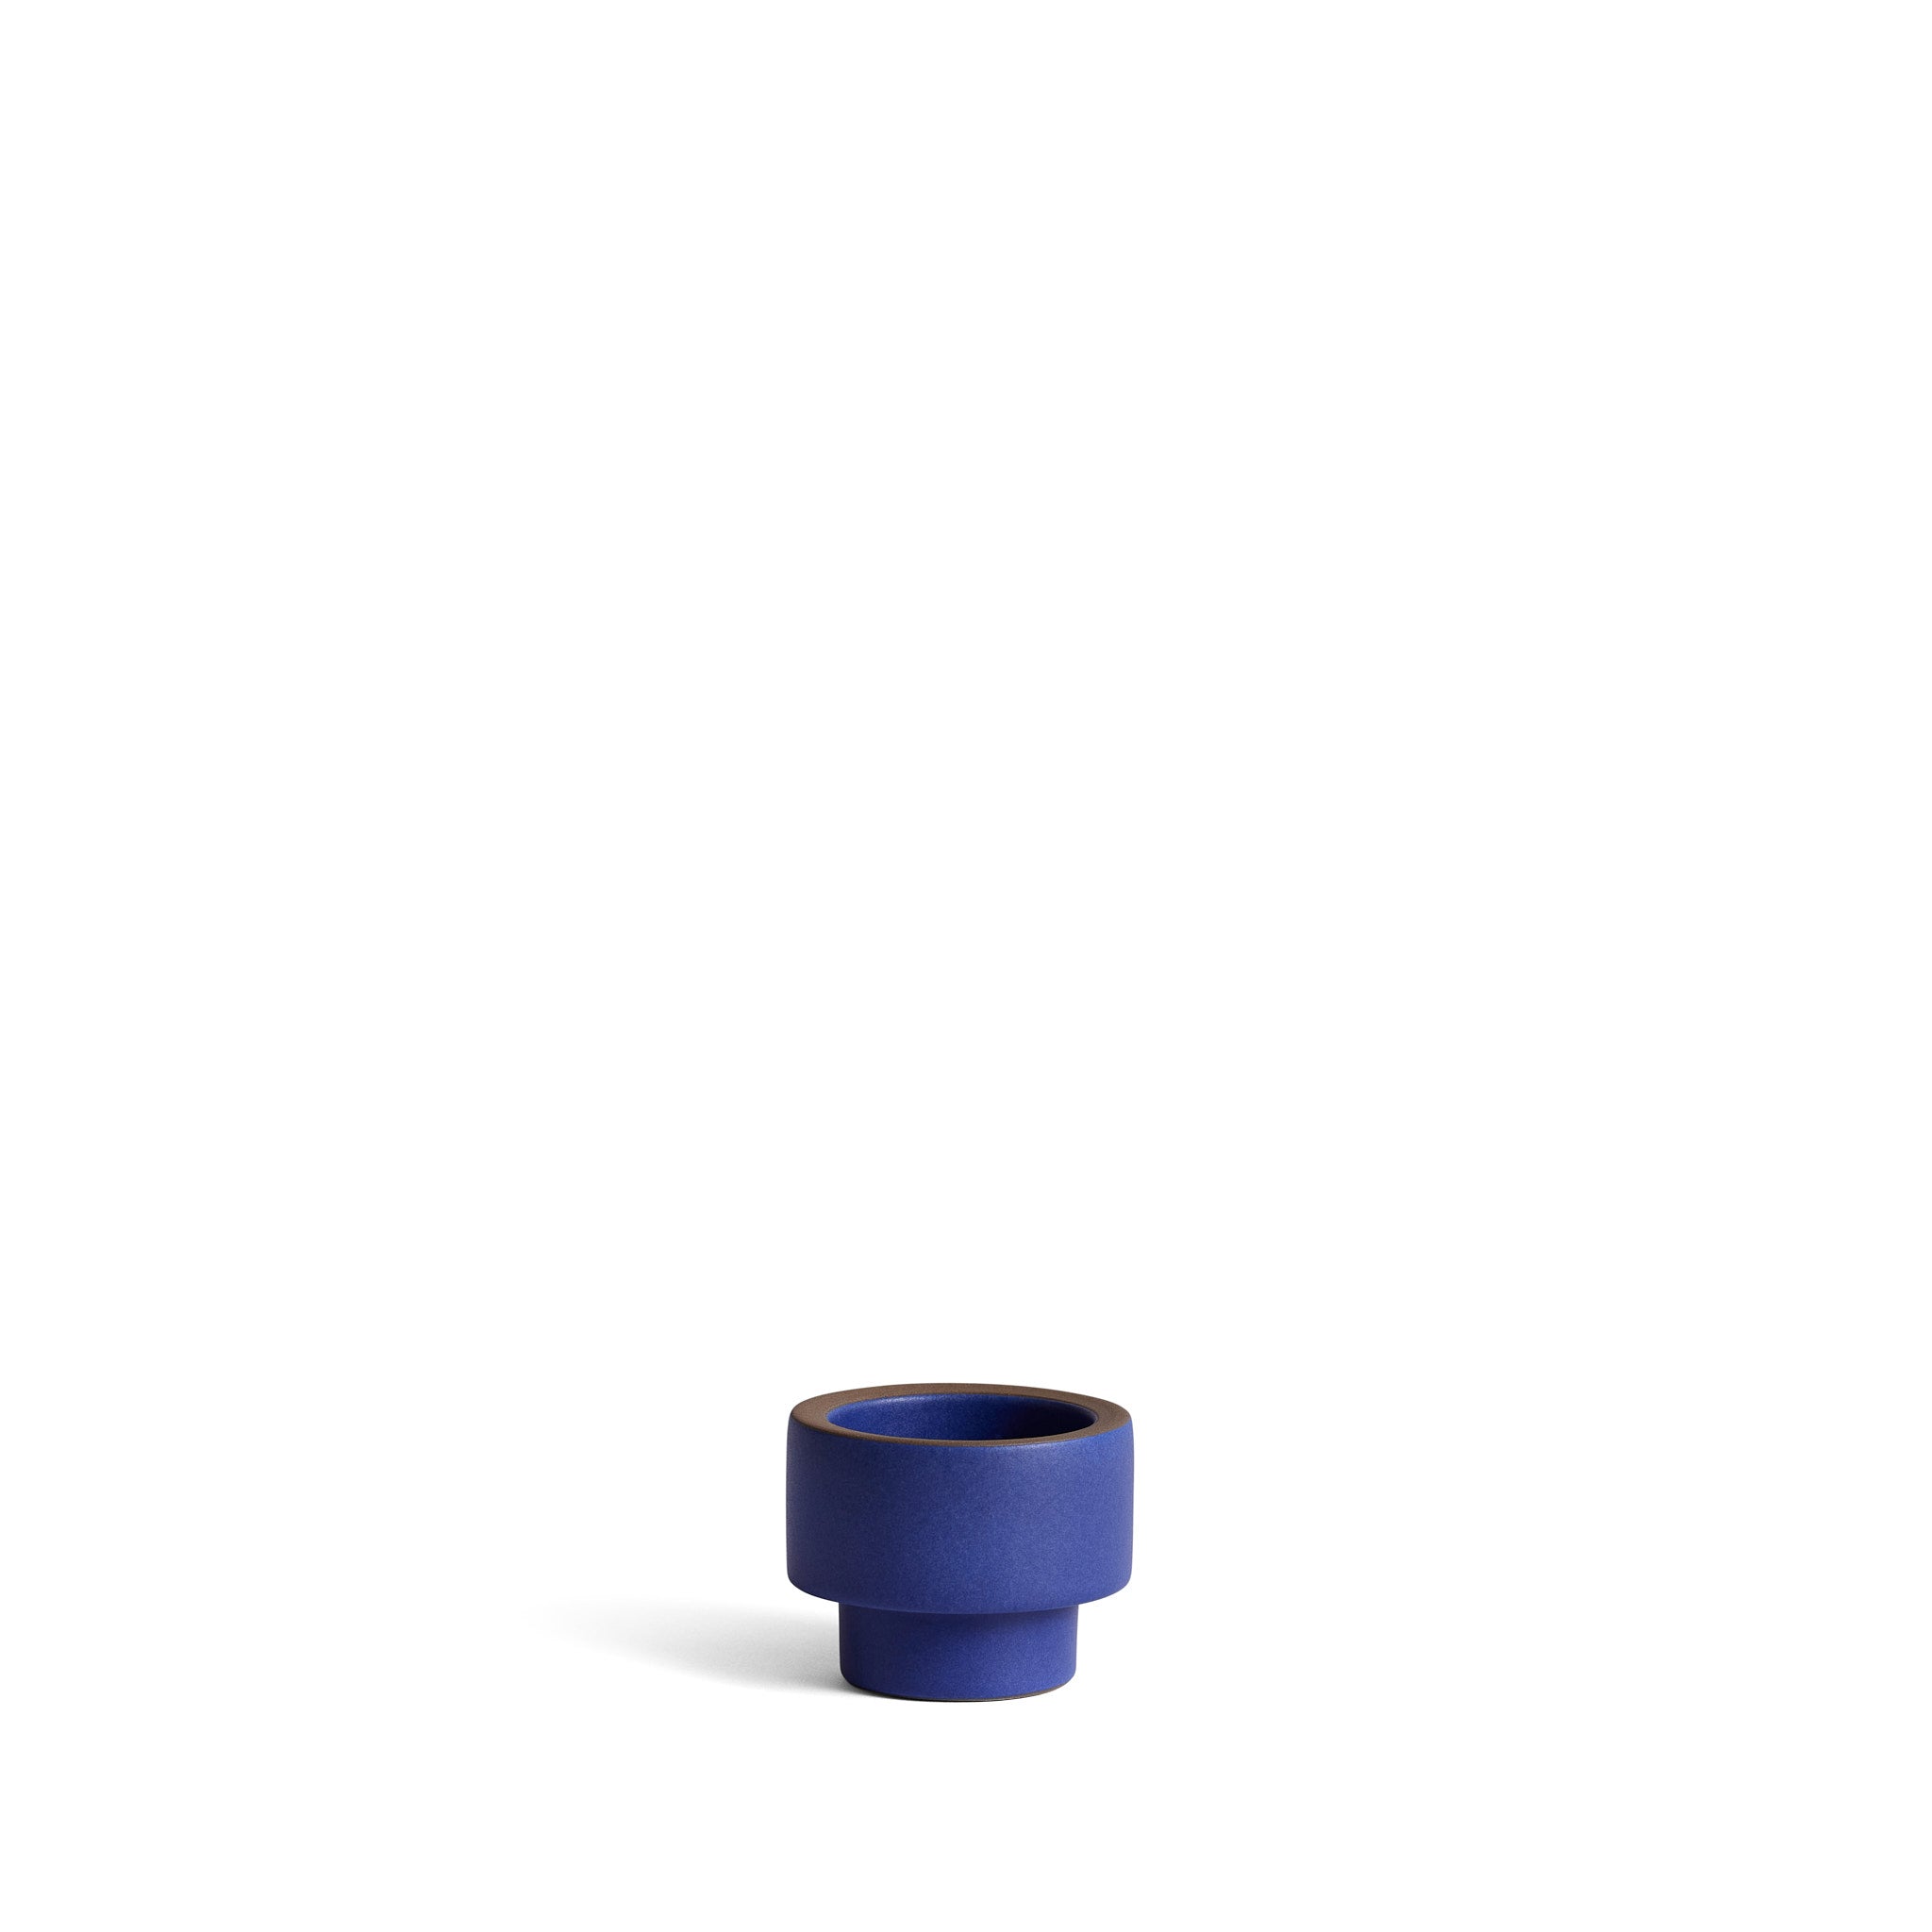 Candleholder in Ultramarine Zoom Image 1